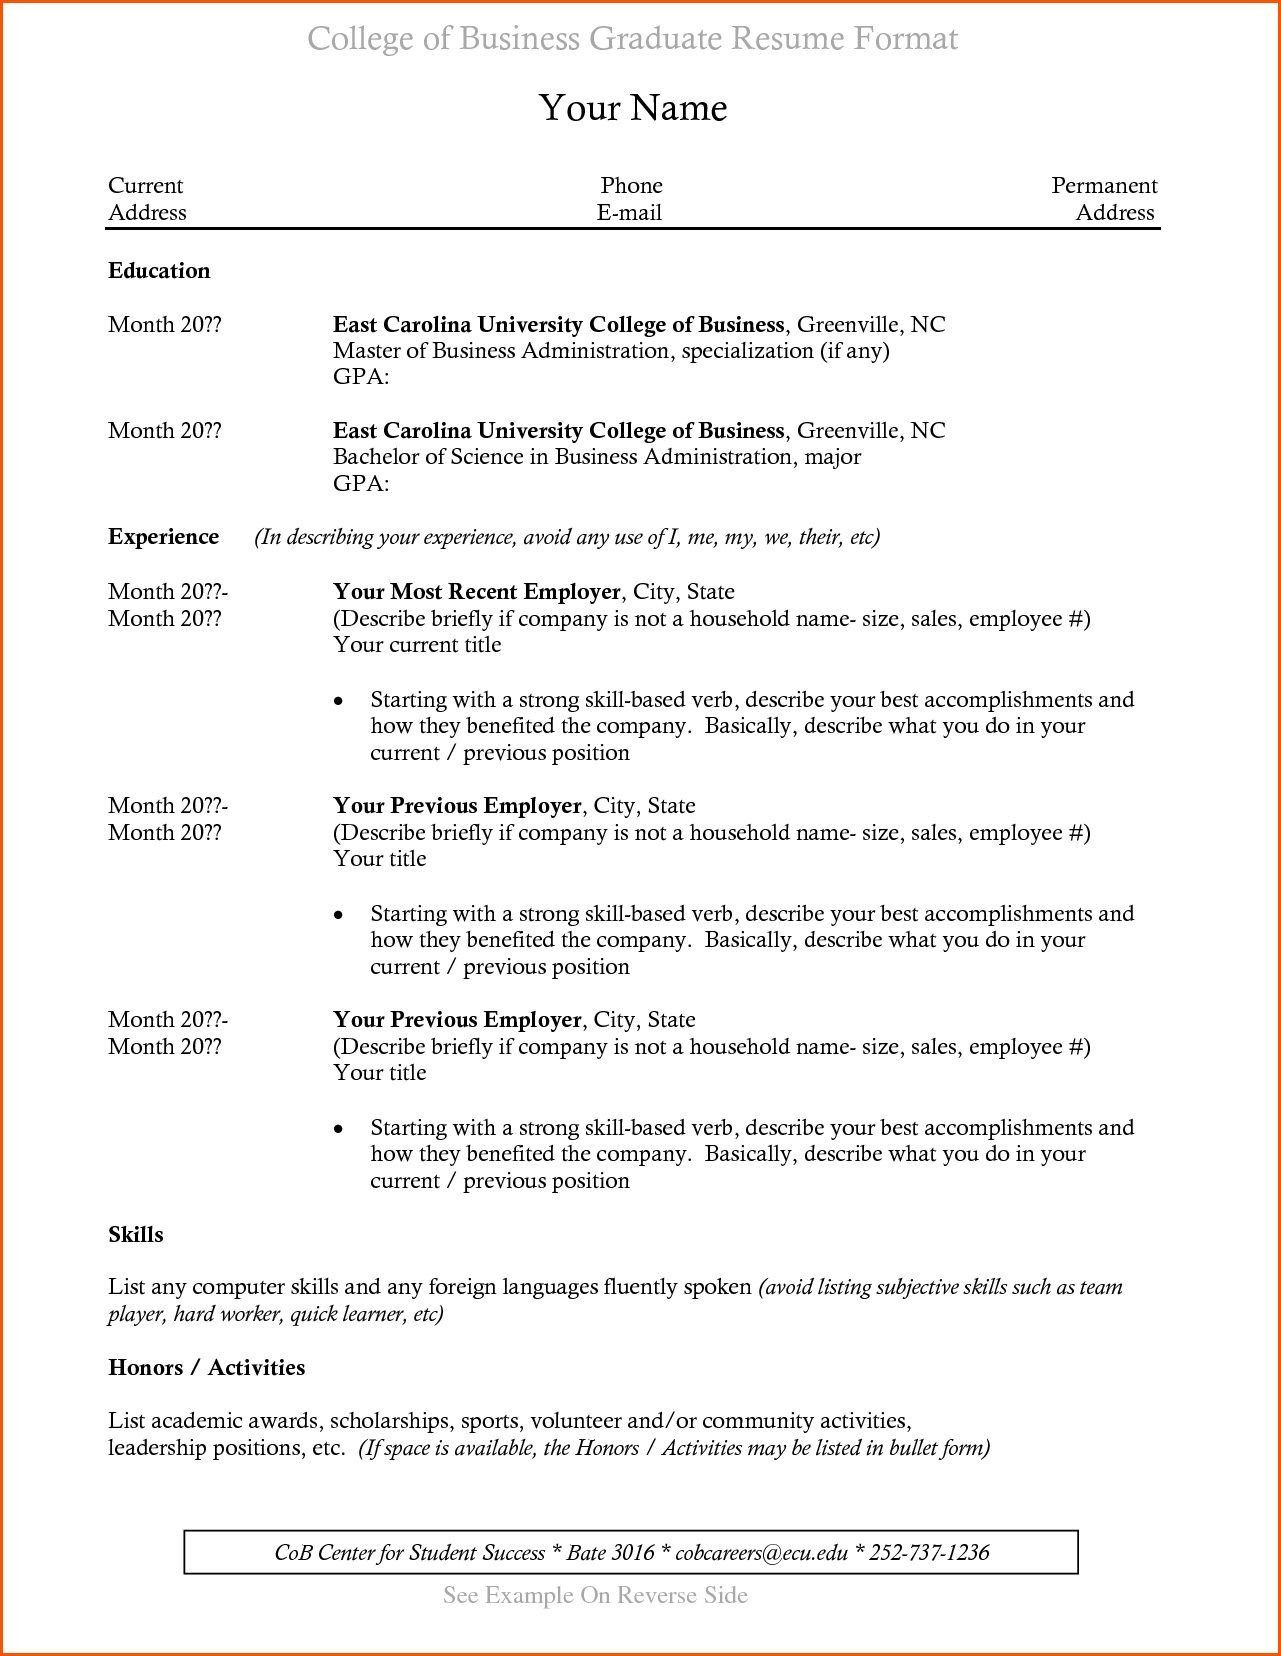 Sample Resume for New College Graduate Resume Templates Recent College Graduate